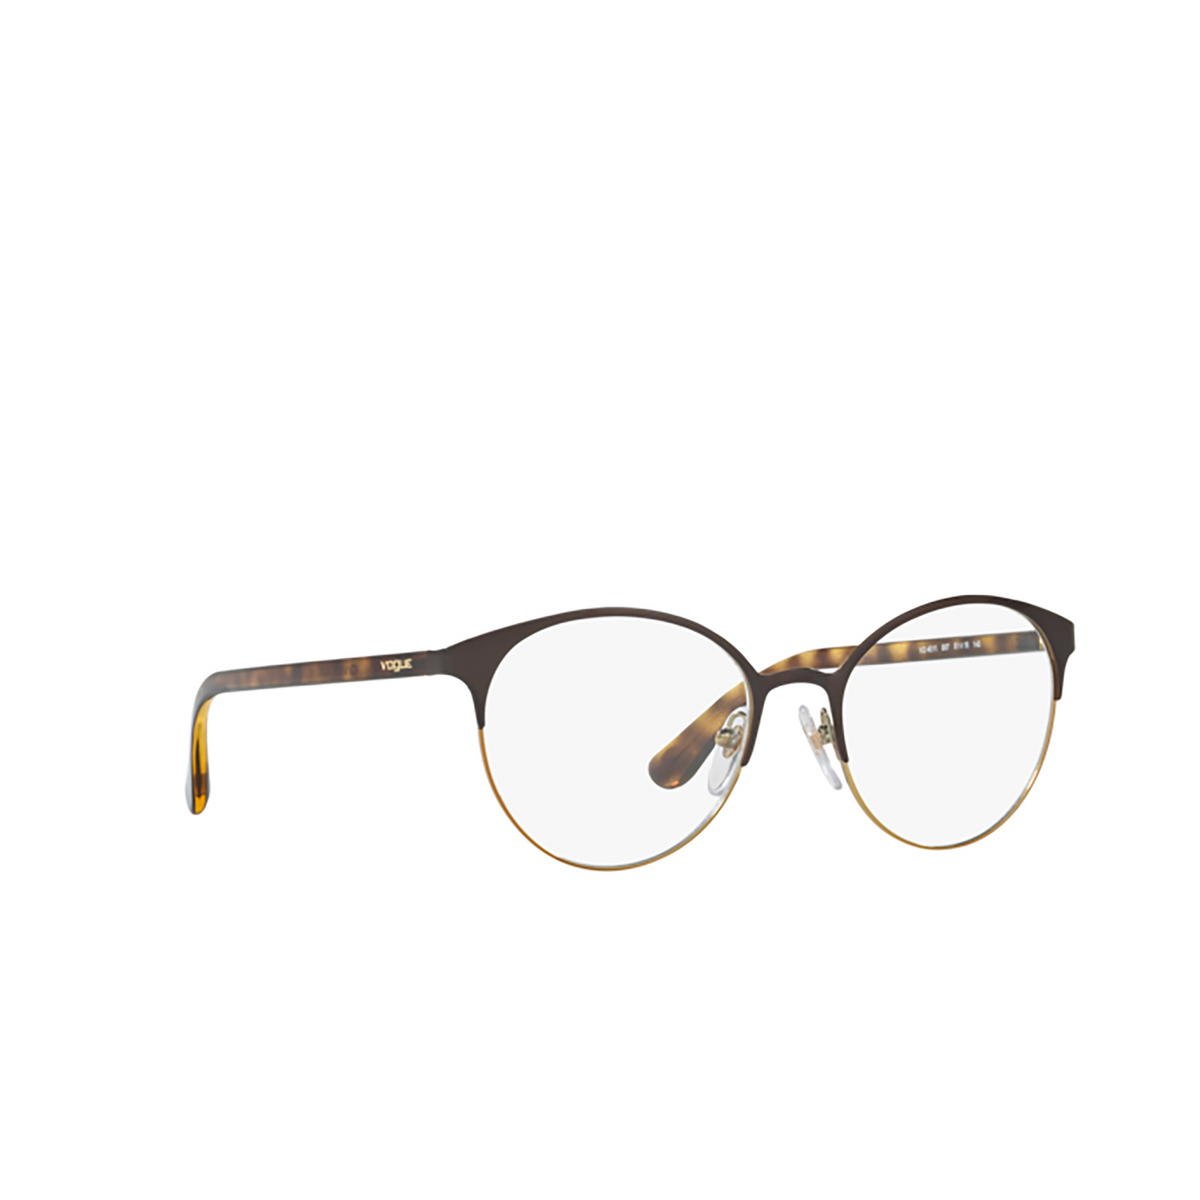 Vogue VO4011 Eyeglasses 997 Top brown/pale gold - three-quarters view